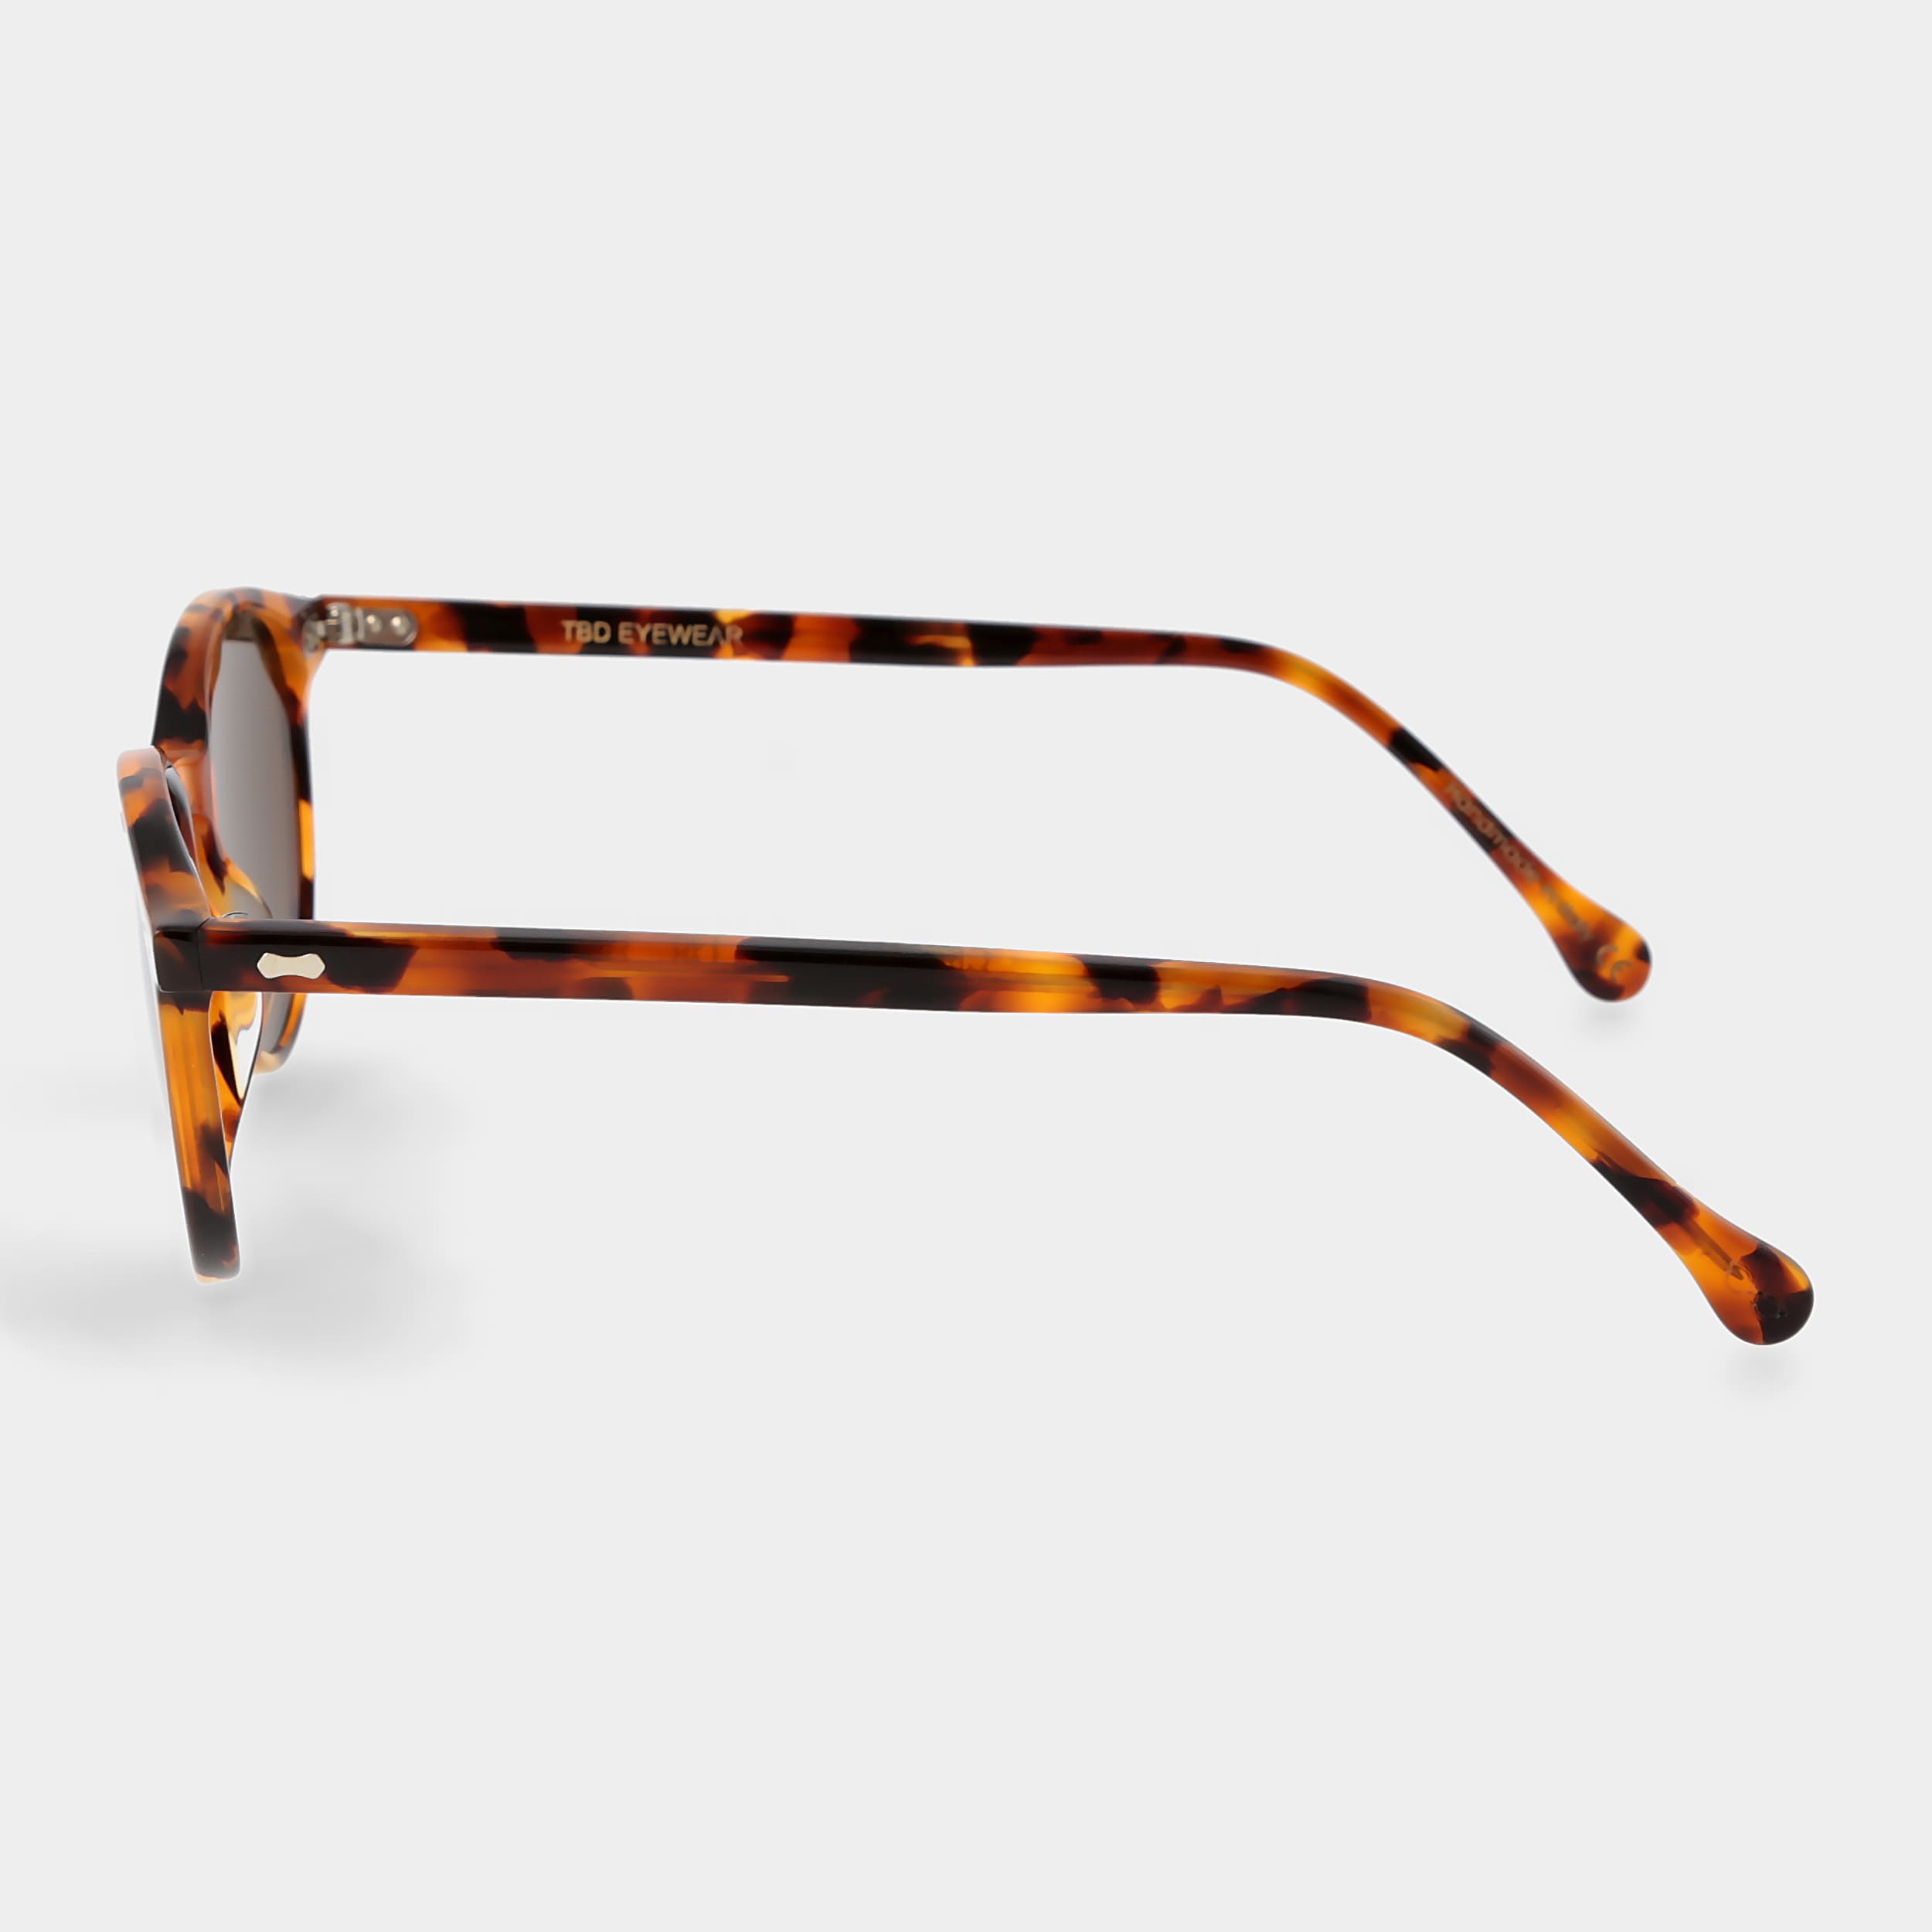 sunglasses-cran-amber-tortoise-tobacco-tbd-eyewear-lateral